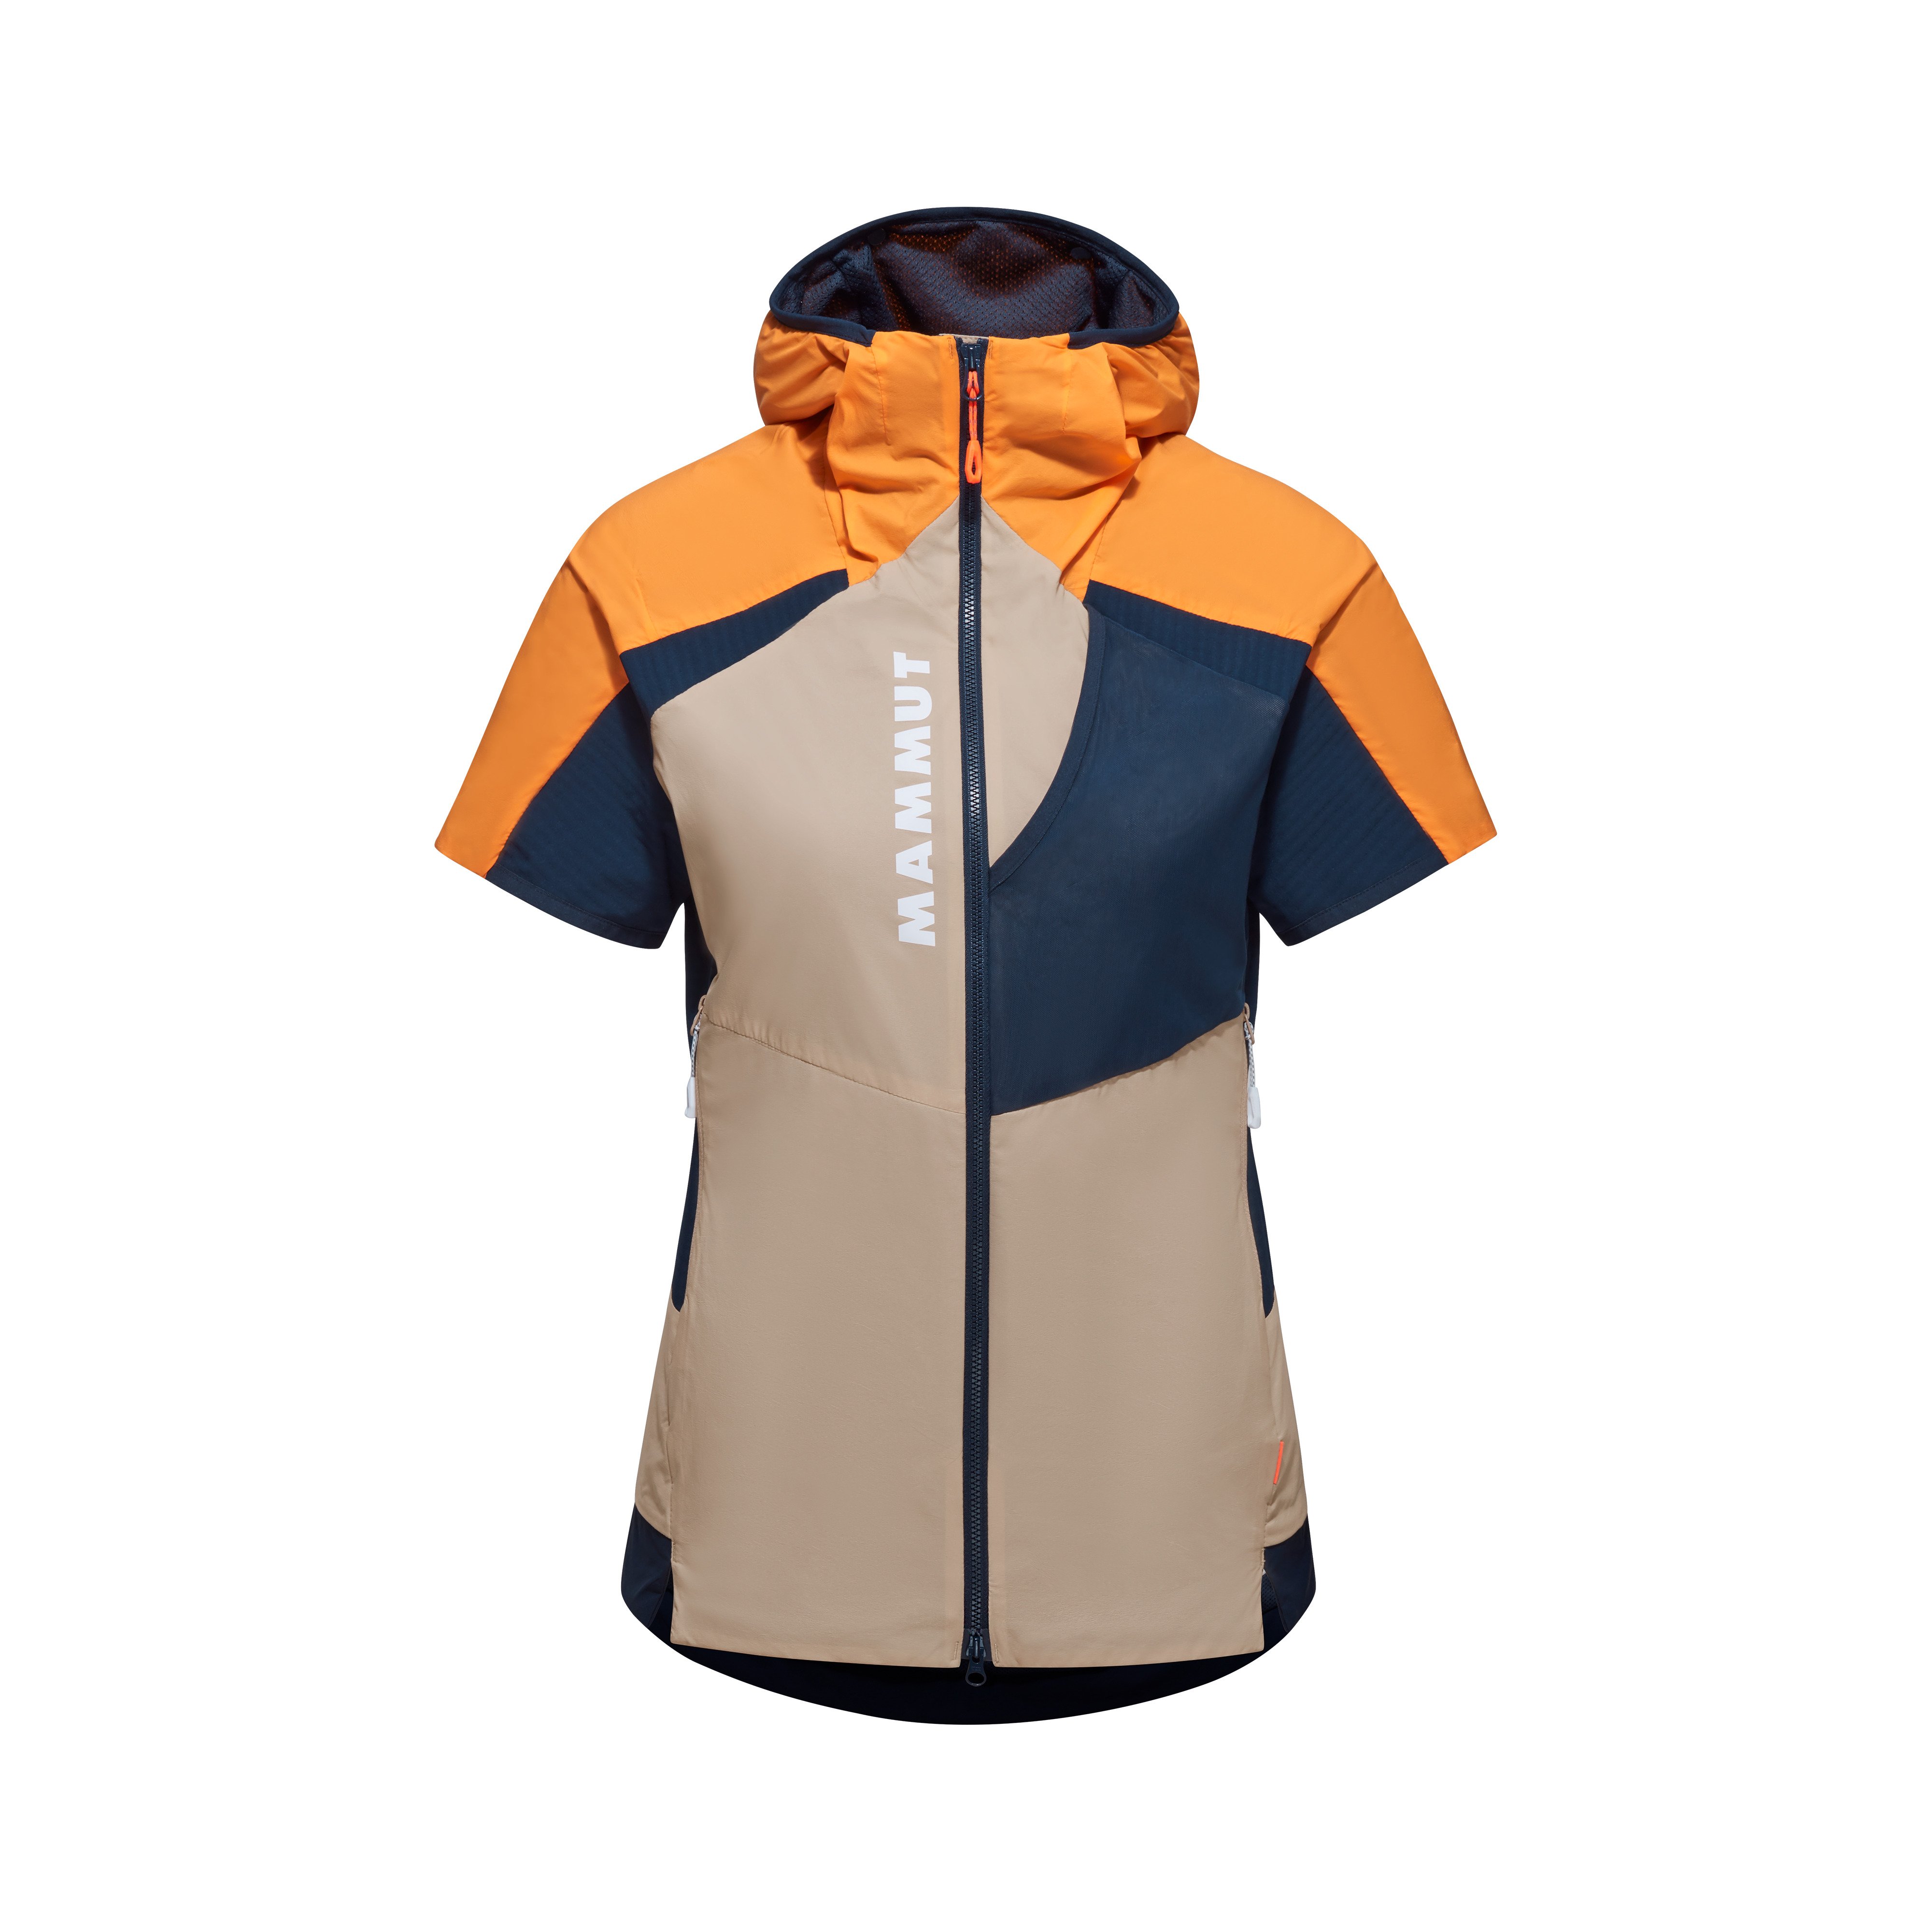 Aenergy IN Hybrid Hooded Vest Women - tangerine-savannah, XL product image